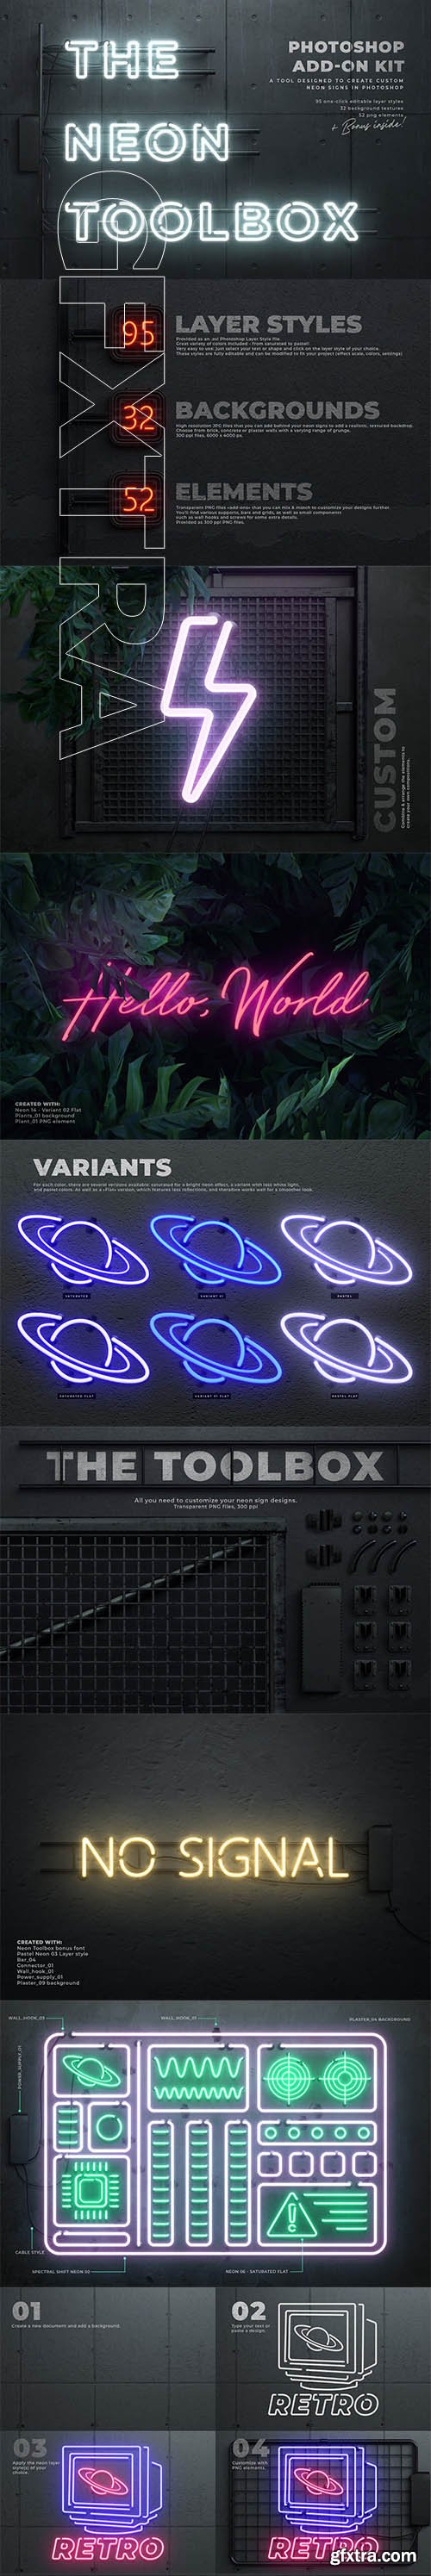 CreativeMarket - The Neon Toolbox 4542717